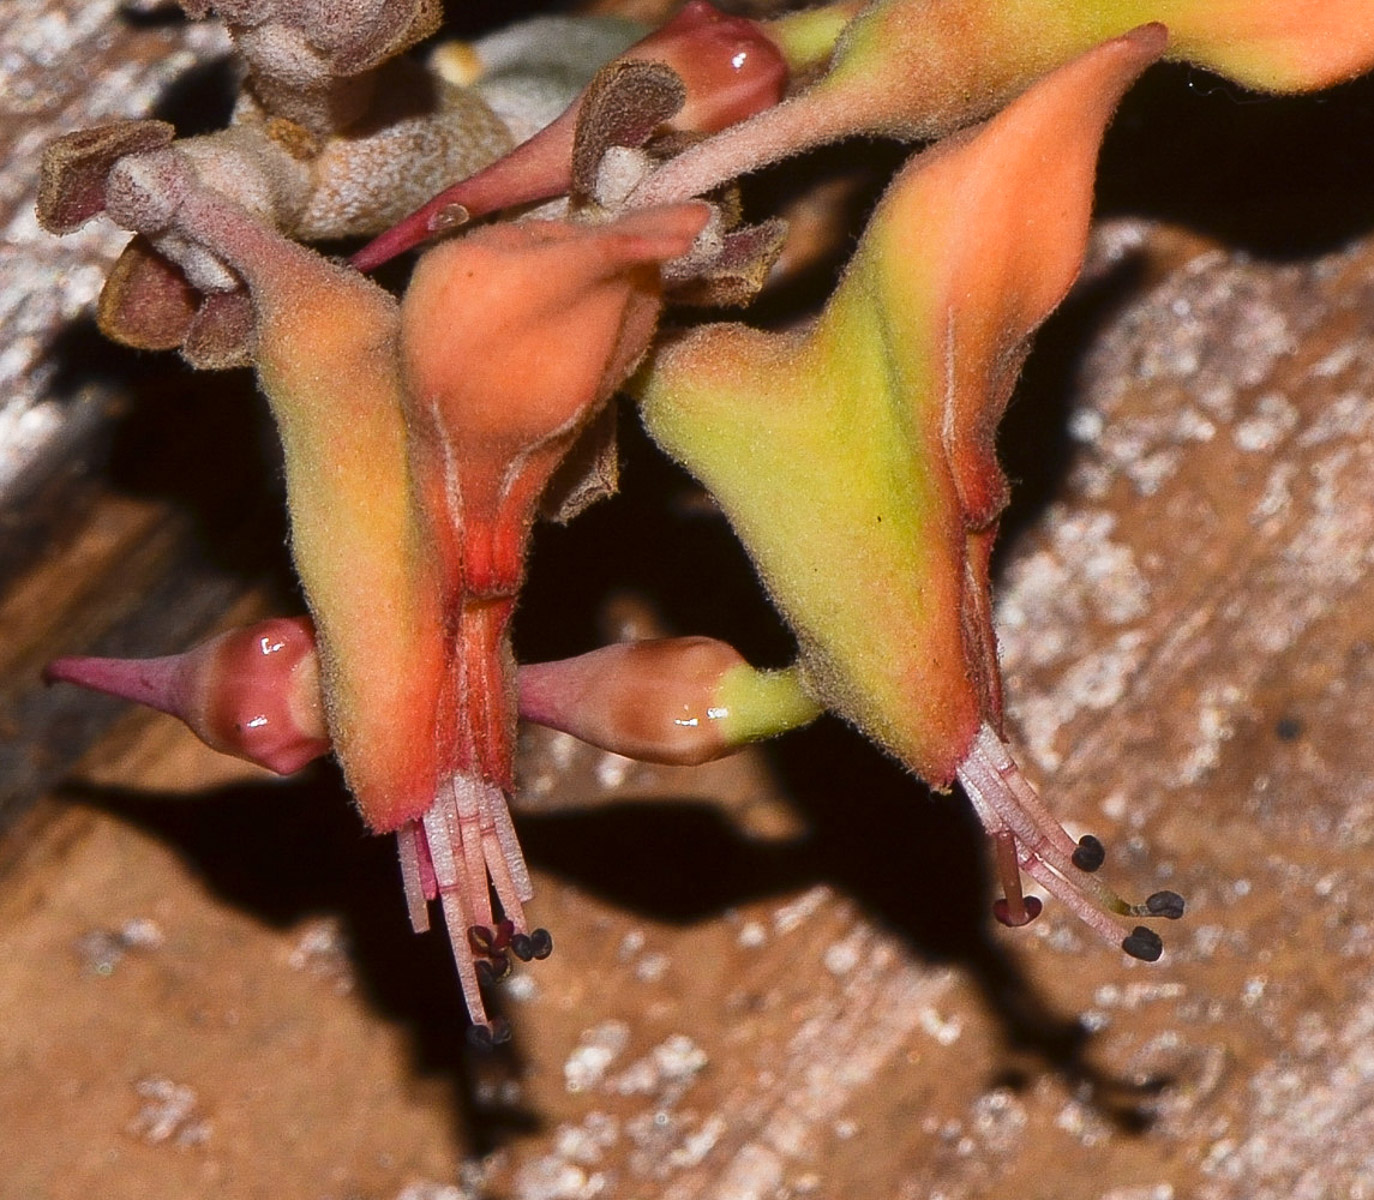 Изображение особи Euphorbia lomelii.